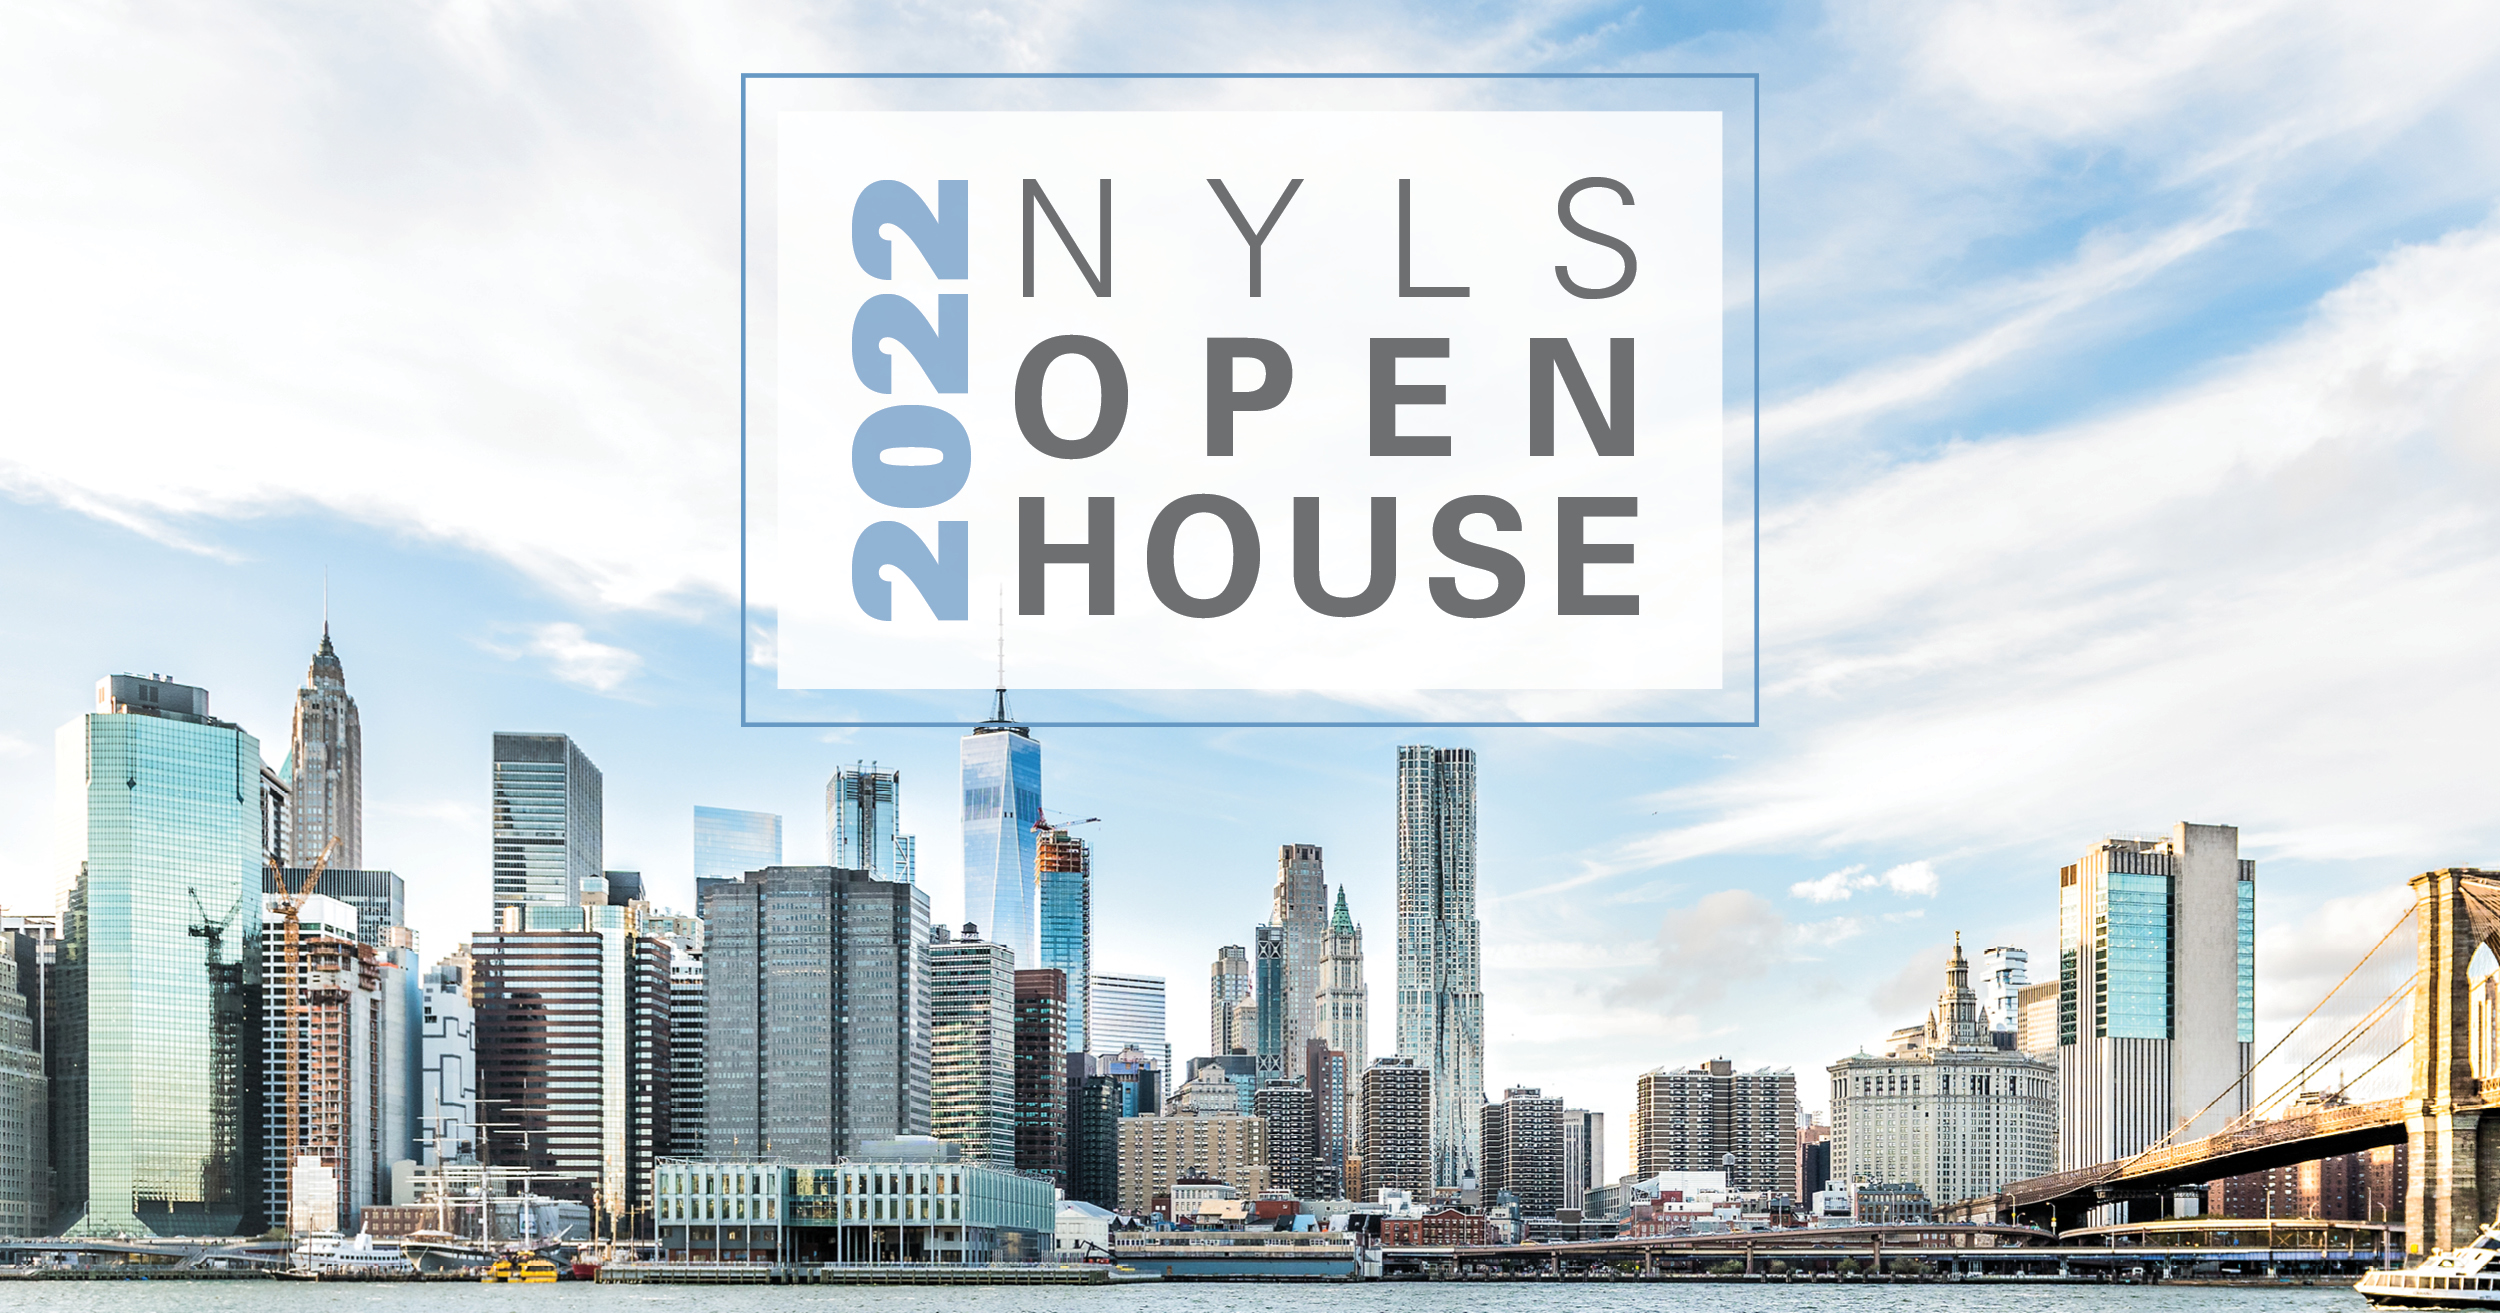 NYLS Open House - New York Law School